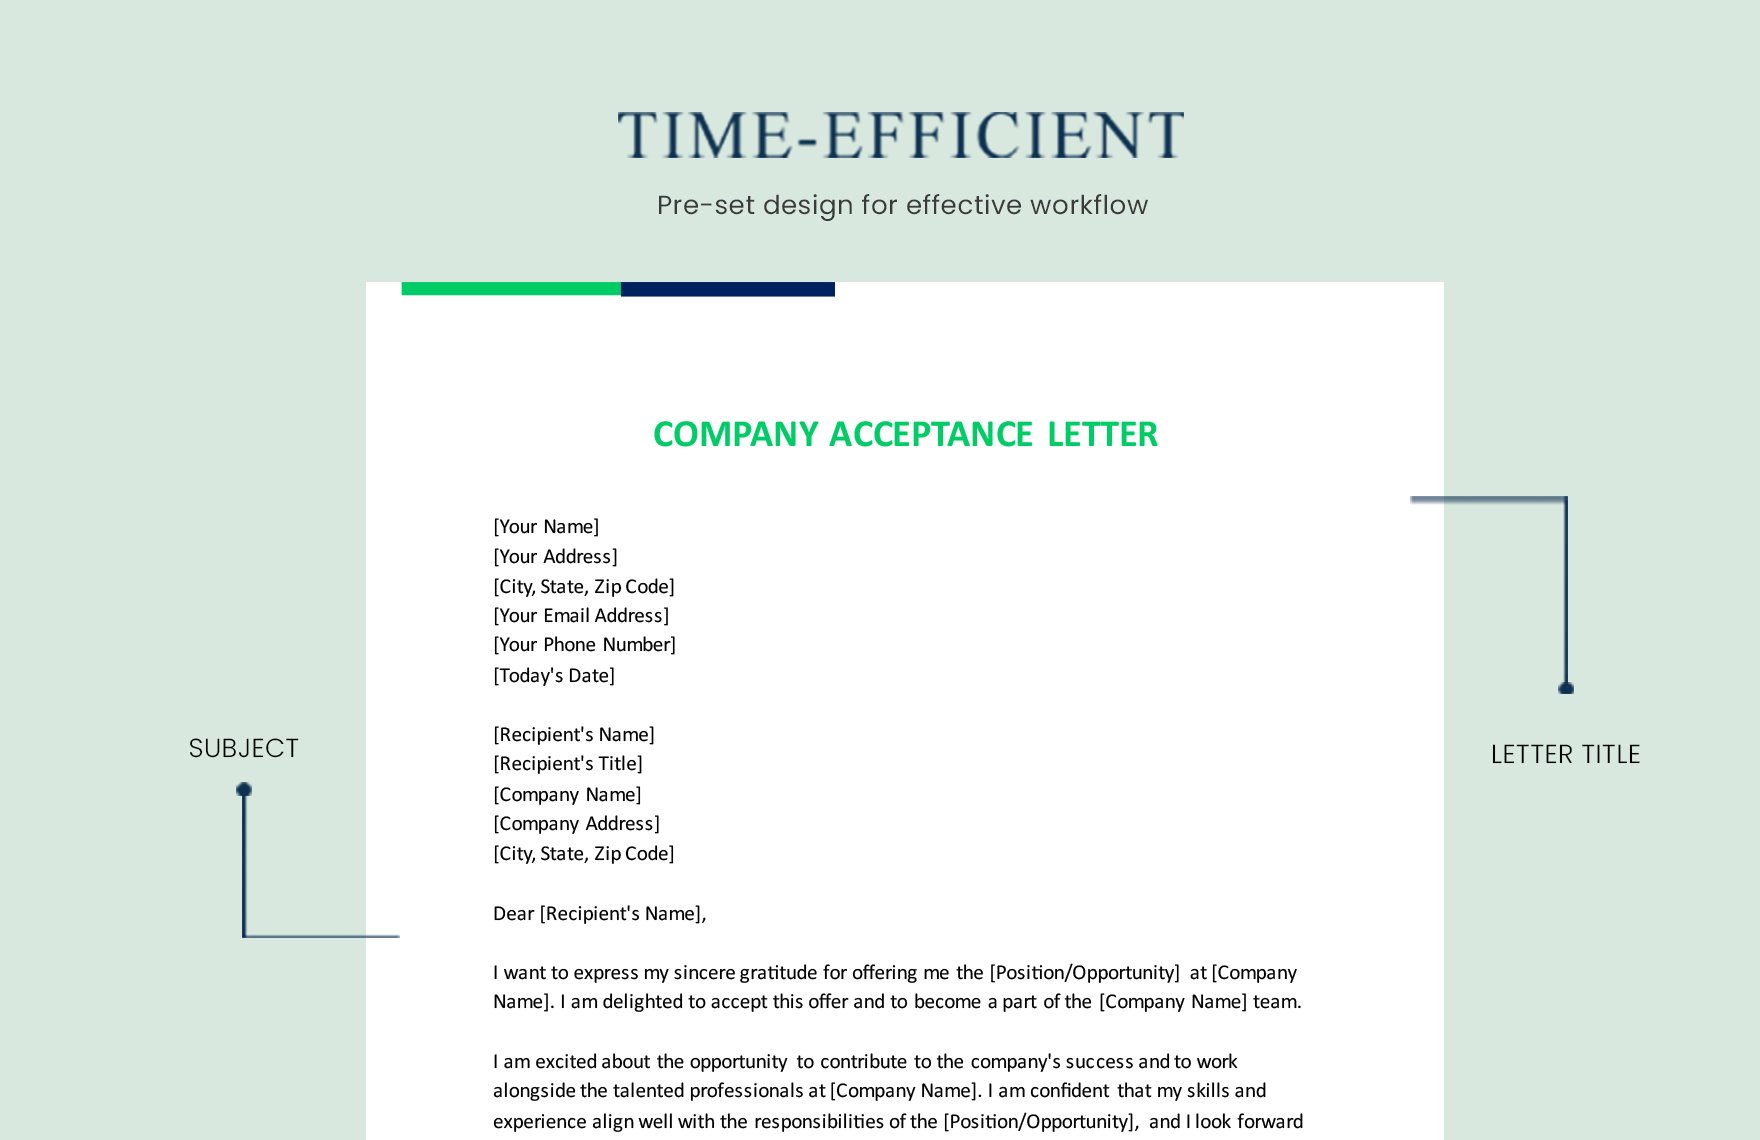   Company Acceptance Letter